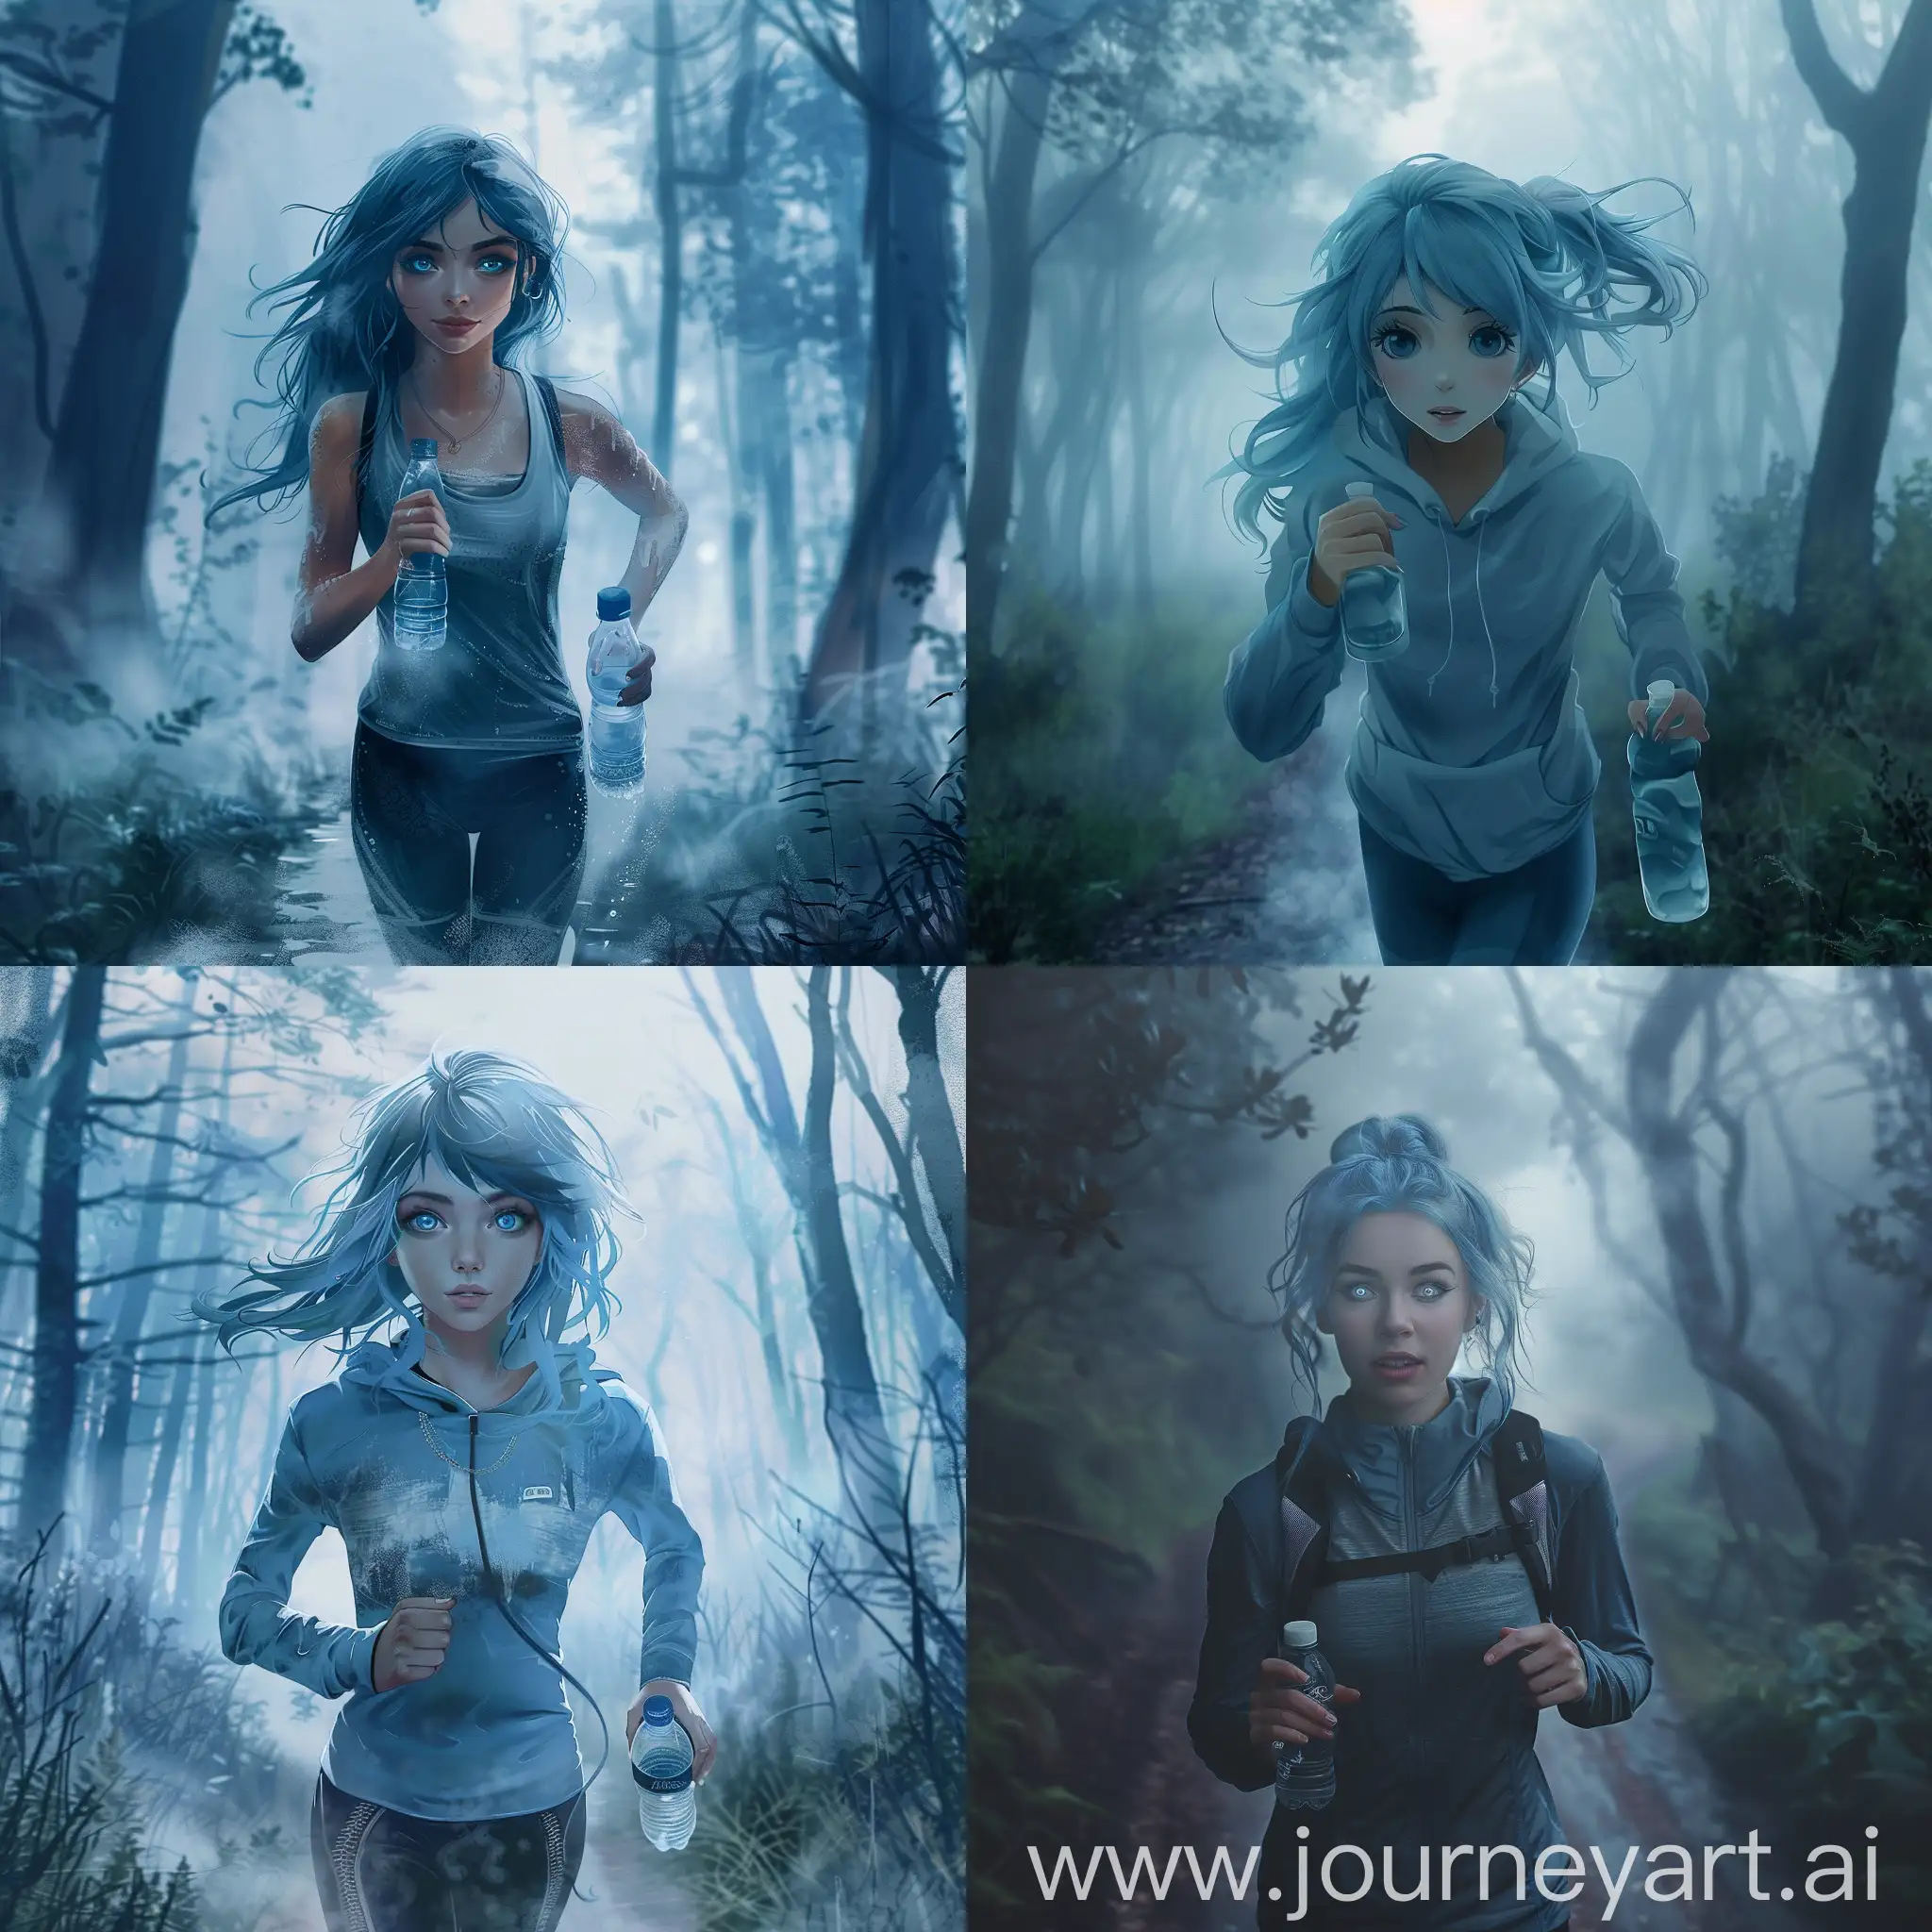 Girl, blue eyes, blue hair, jogging, foggy forest, holding water bottle